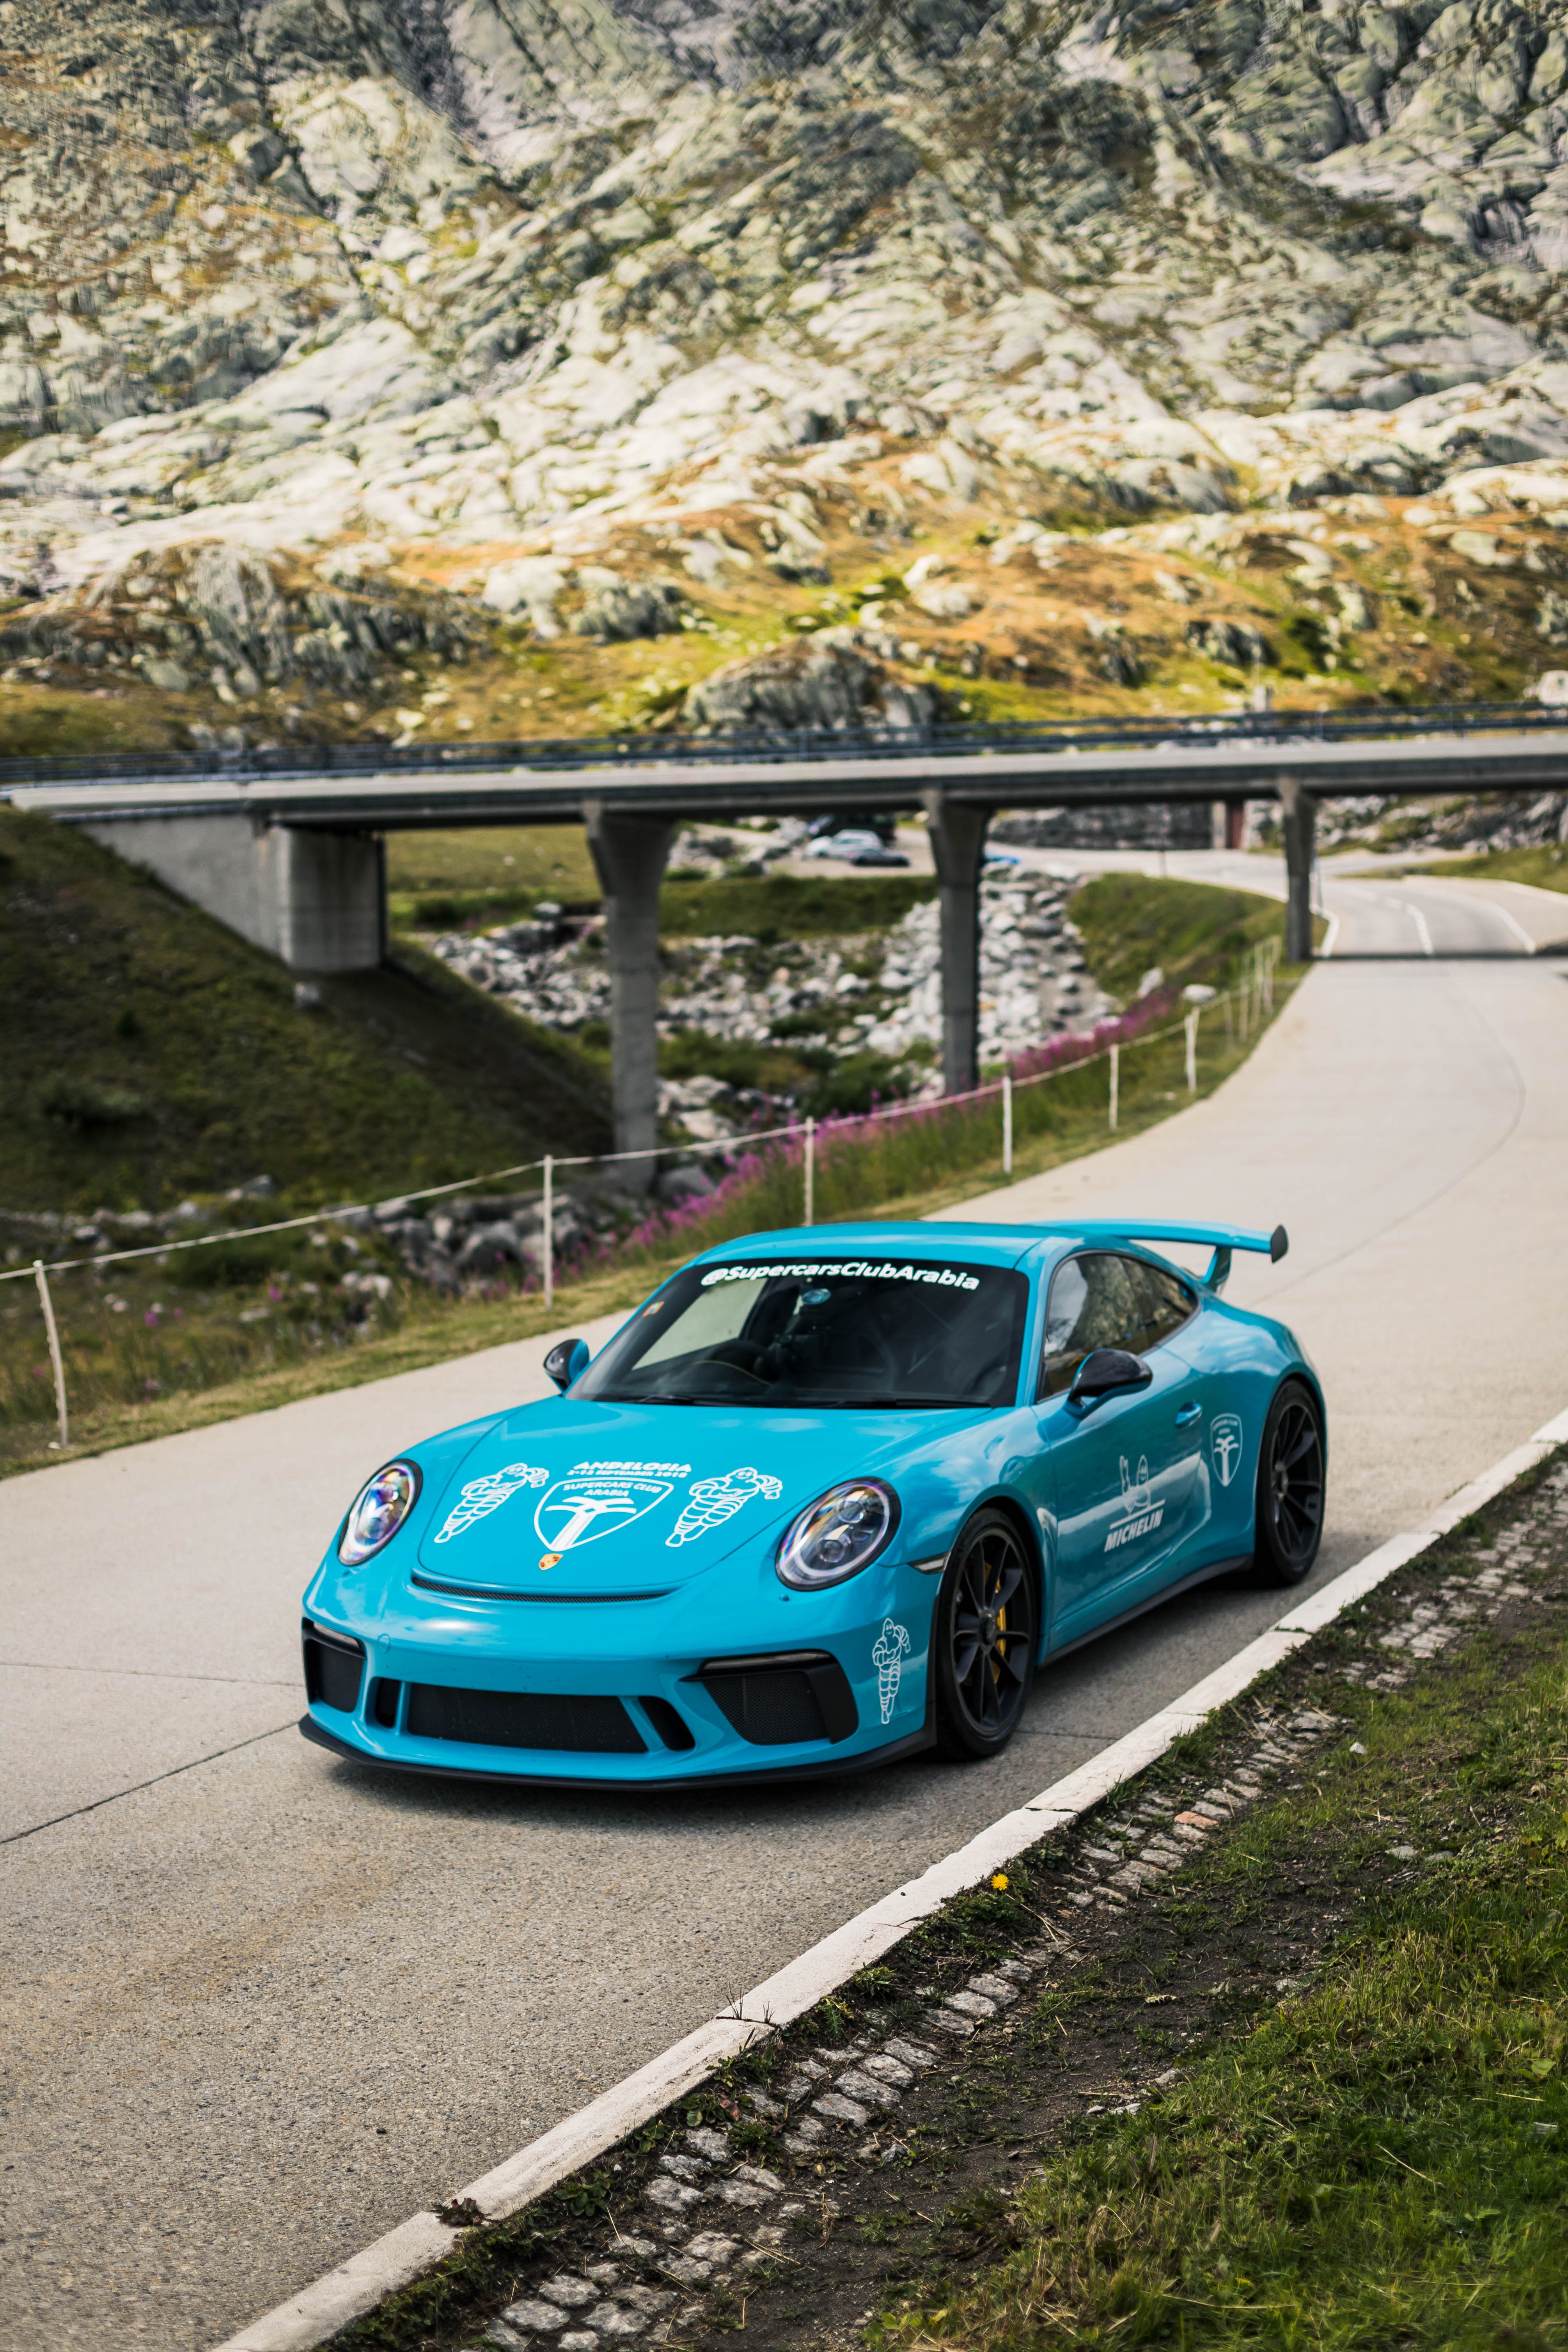 Download Porsche 911 Gt3 wallpaper for mobile phone, free Porsche 911 Gt3 HD picture